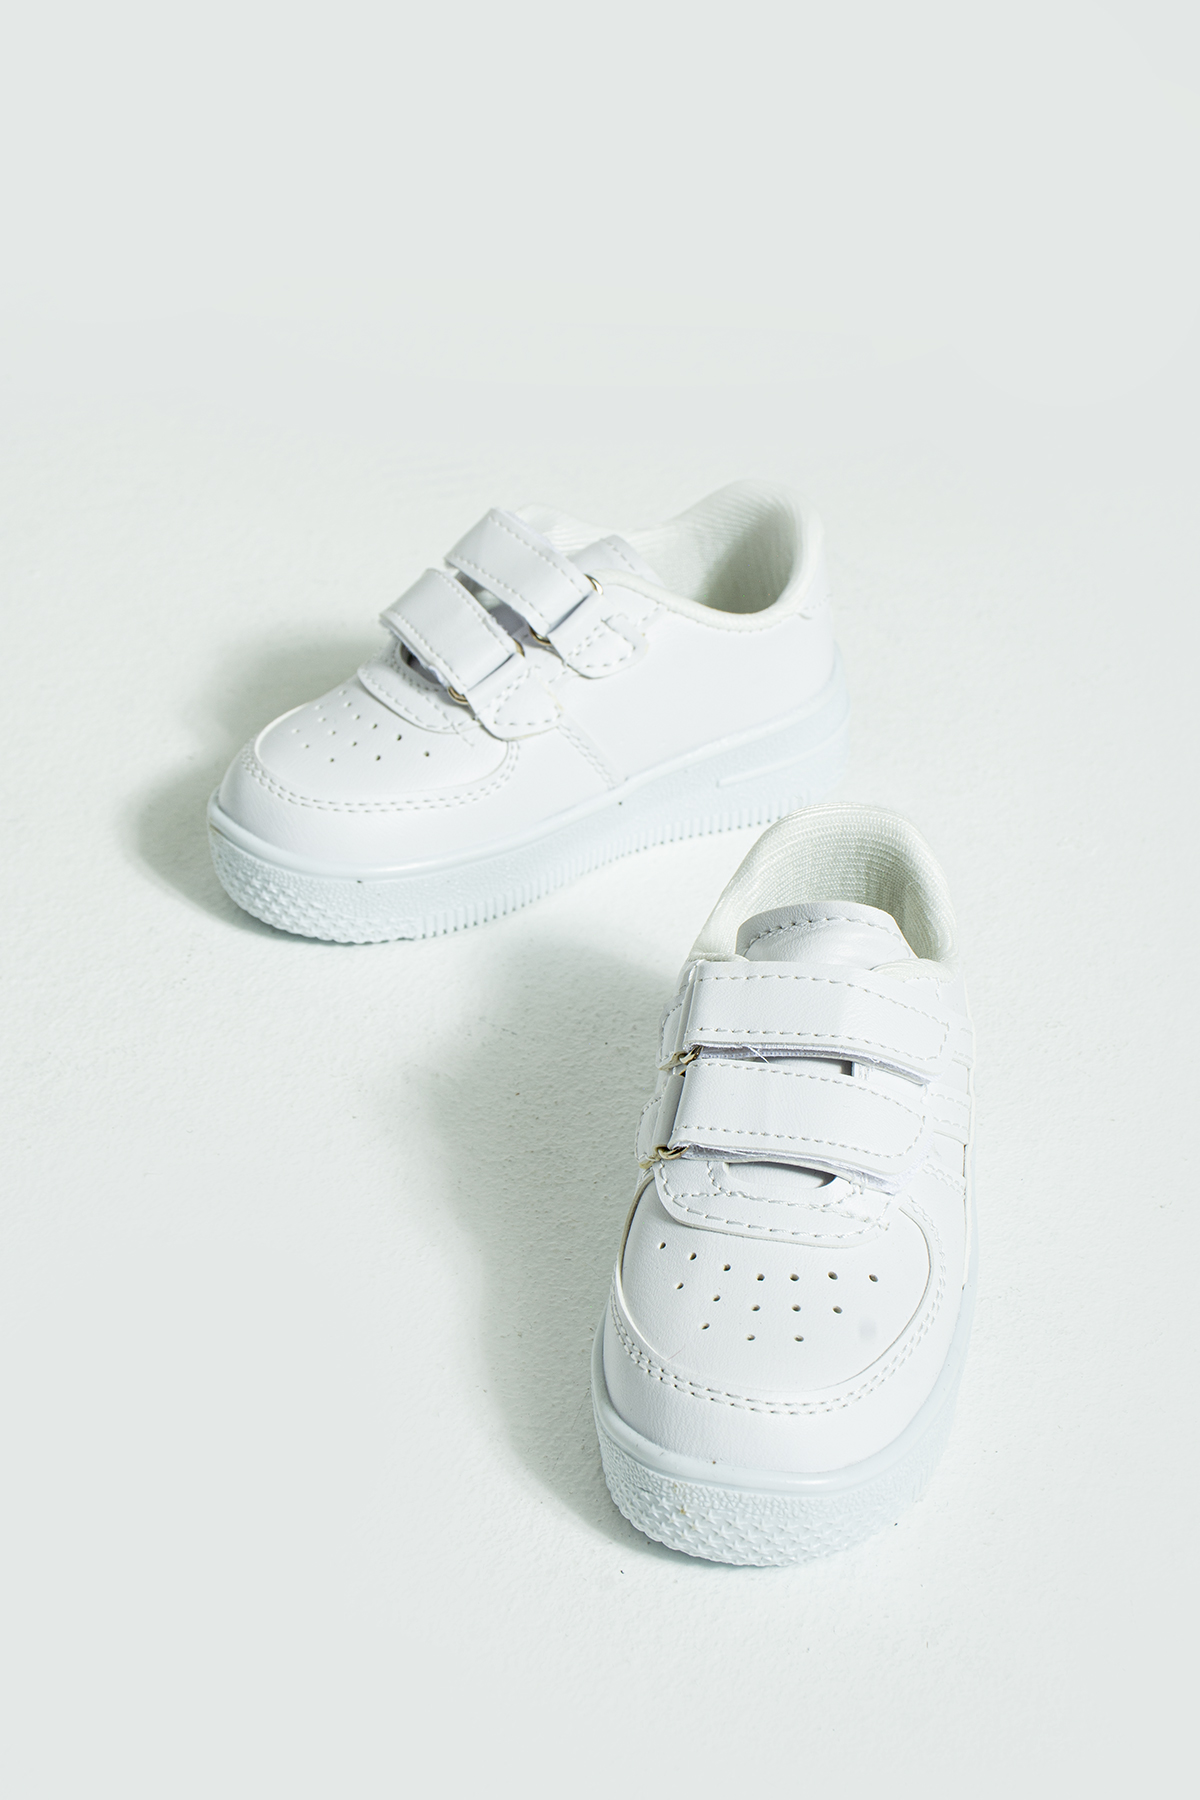 Pembe Potin Rahat Taban Cırtlı Çocuk Sneakers 001-700-23 - Beyaz